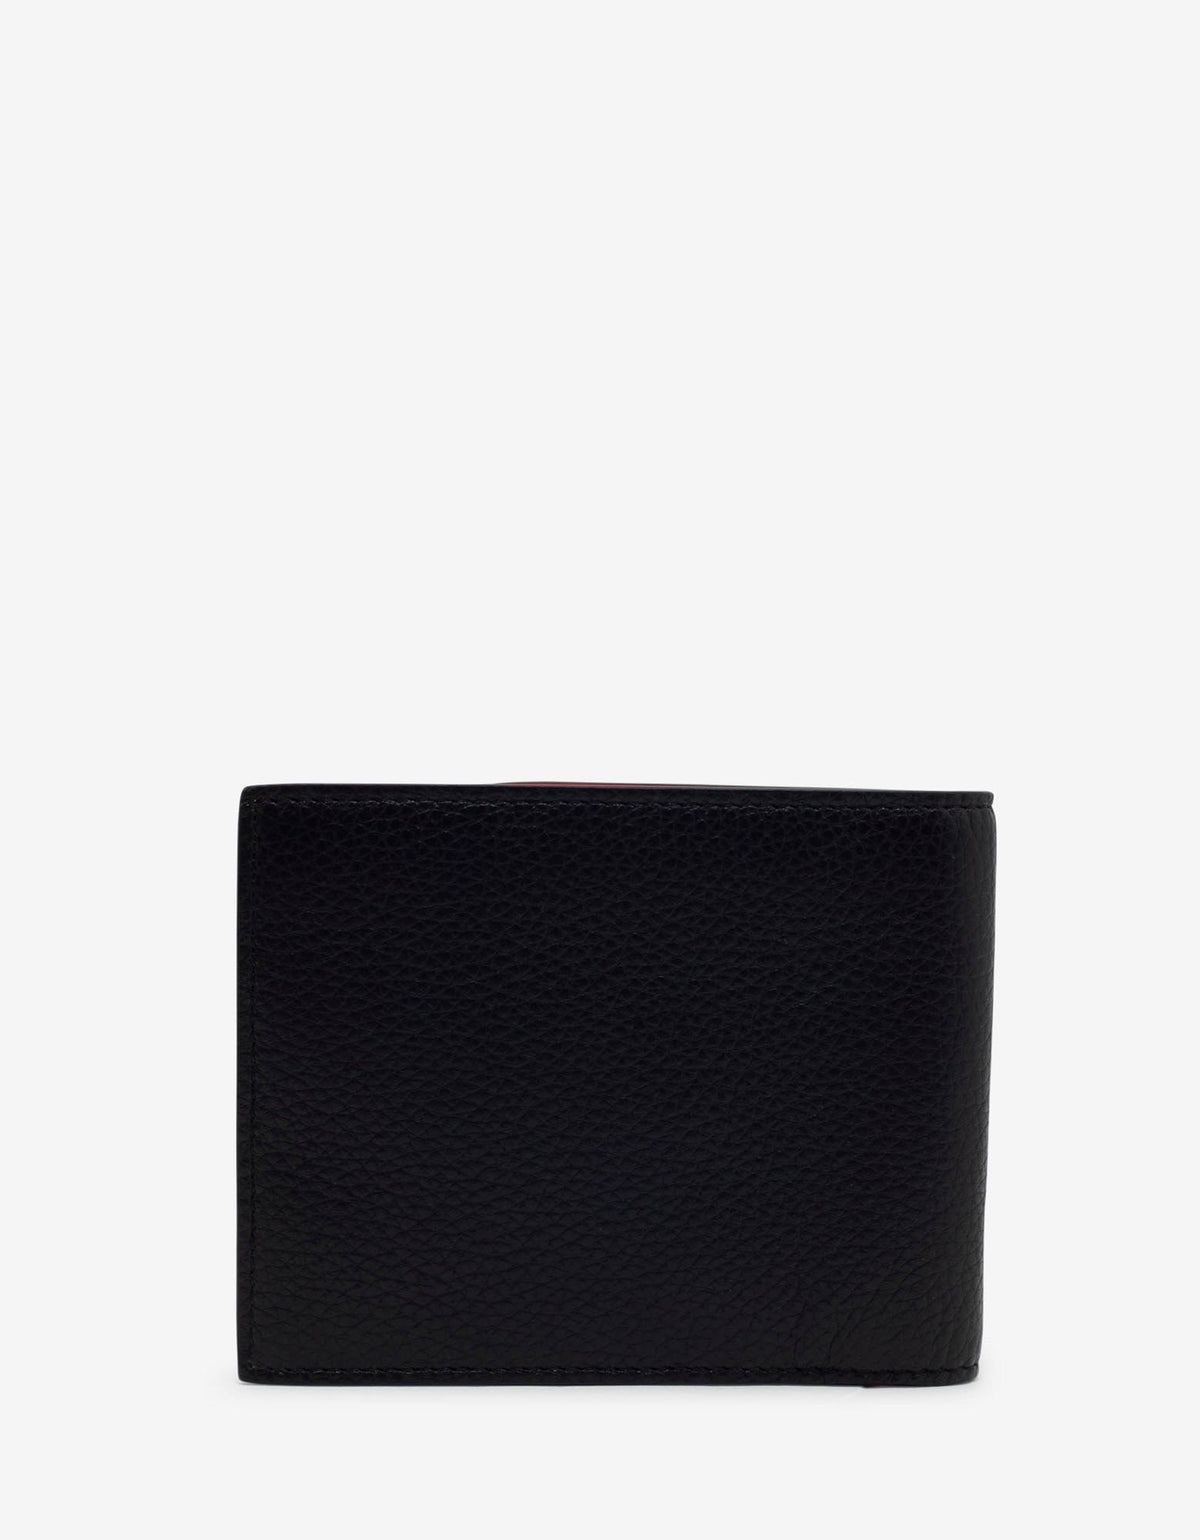 Christian Louboutin Coolcard Sneakers Sole Black & Red Billfold Wallet -